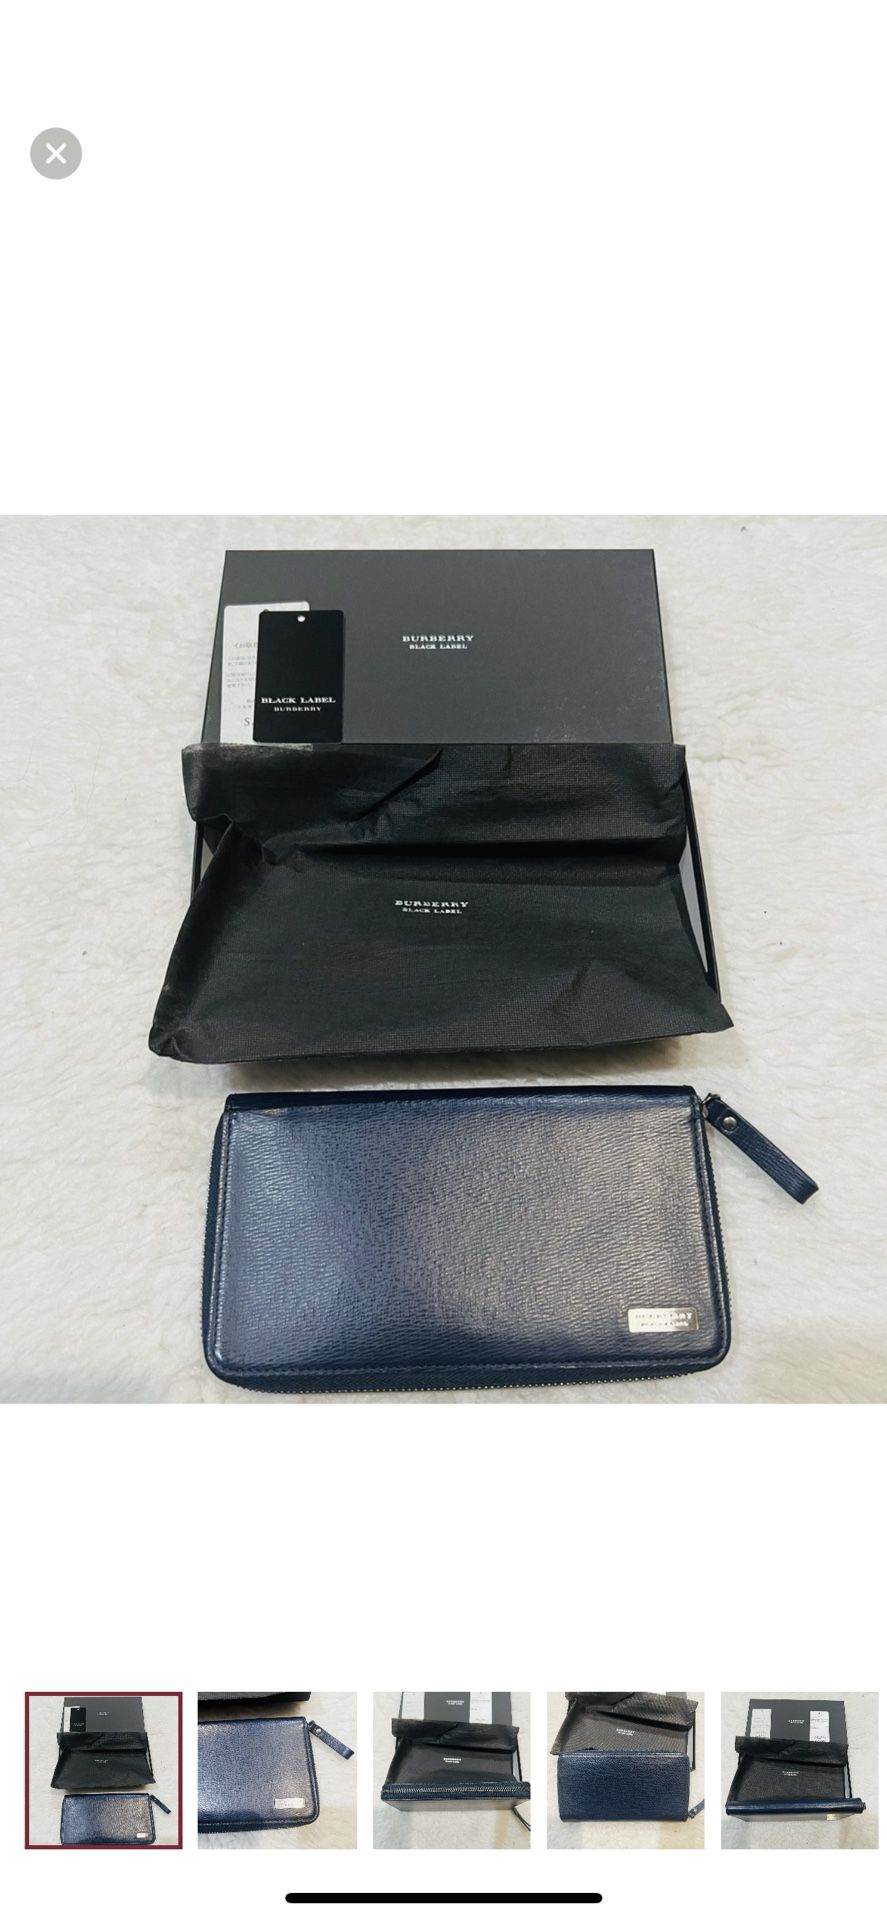 Burberry Black Label Navy Blue Leather Zip Around Unisex Wallet W/ Dust Case & Box